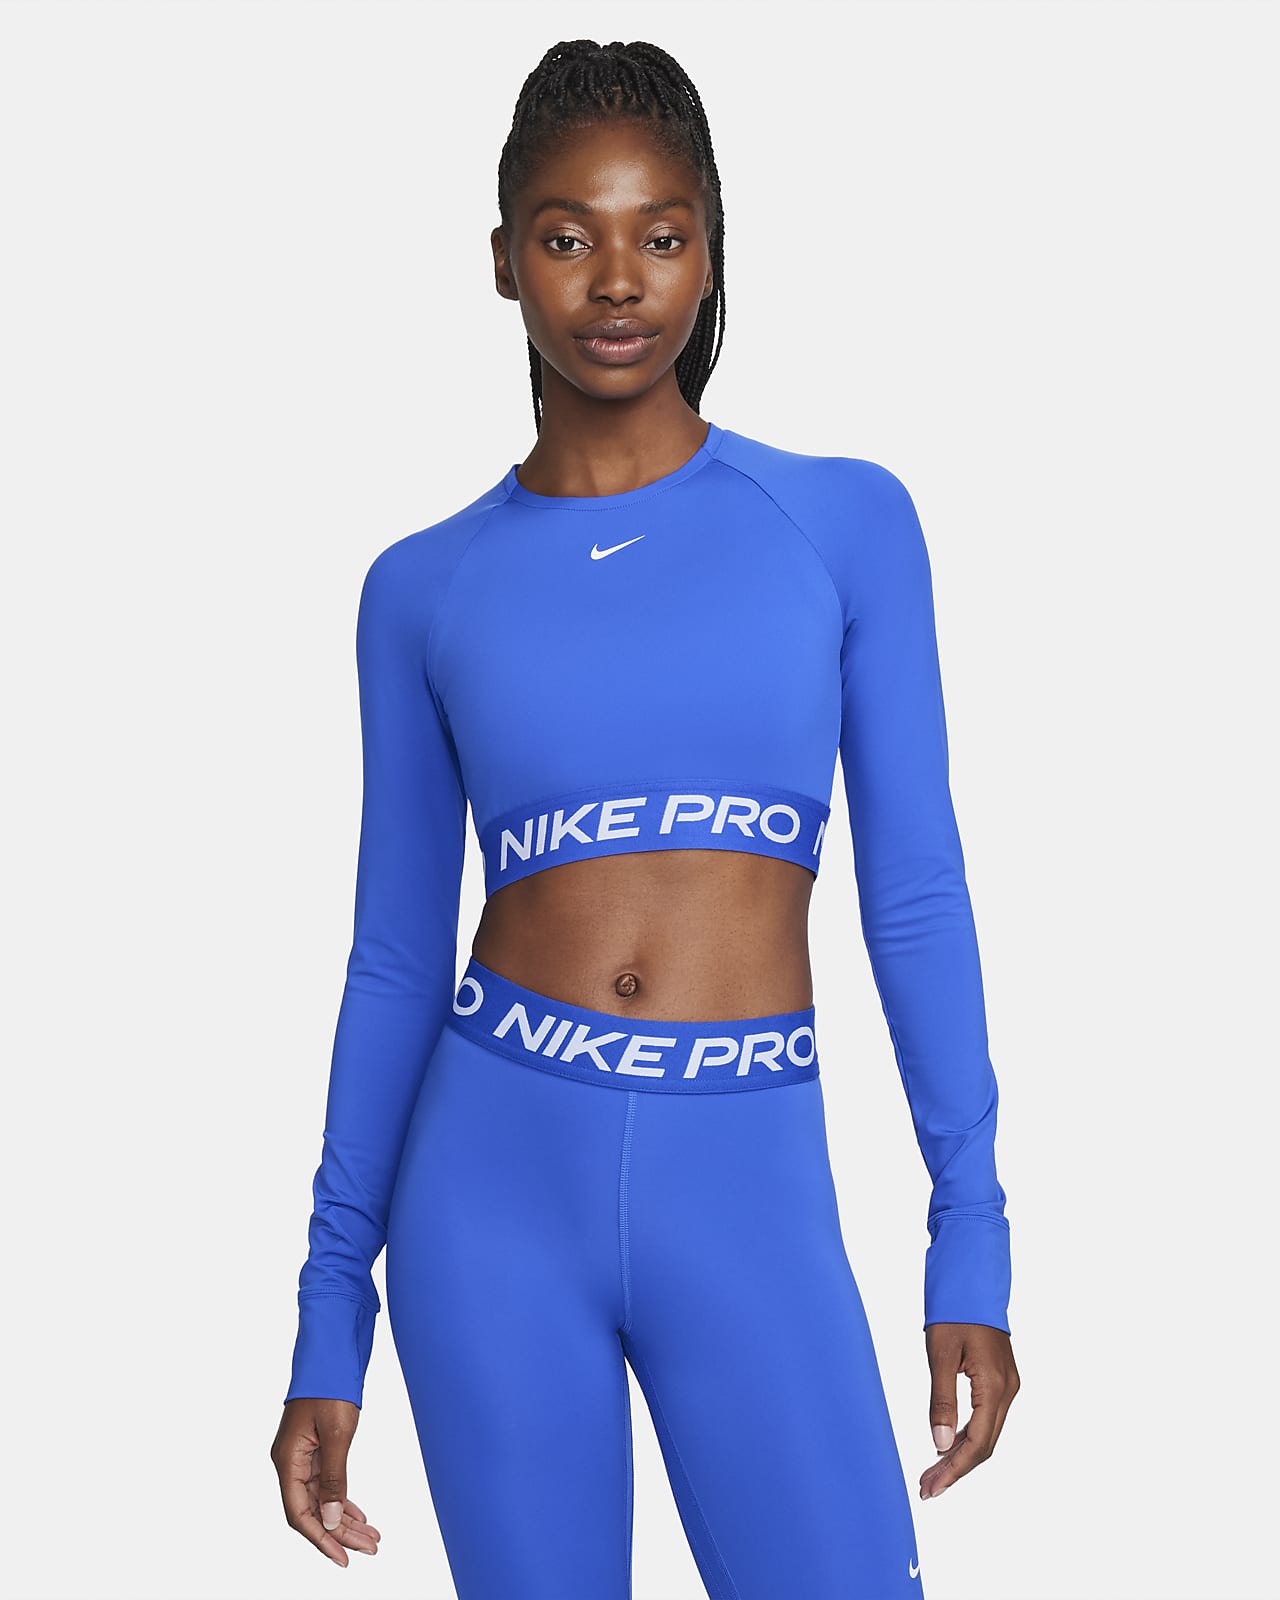 Nike Pro 365 Women's Dri-FIT Cropped Long-Sleeve Top. Nike RO